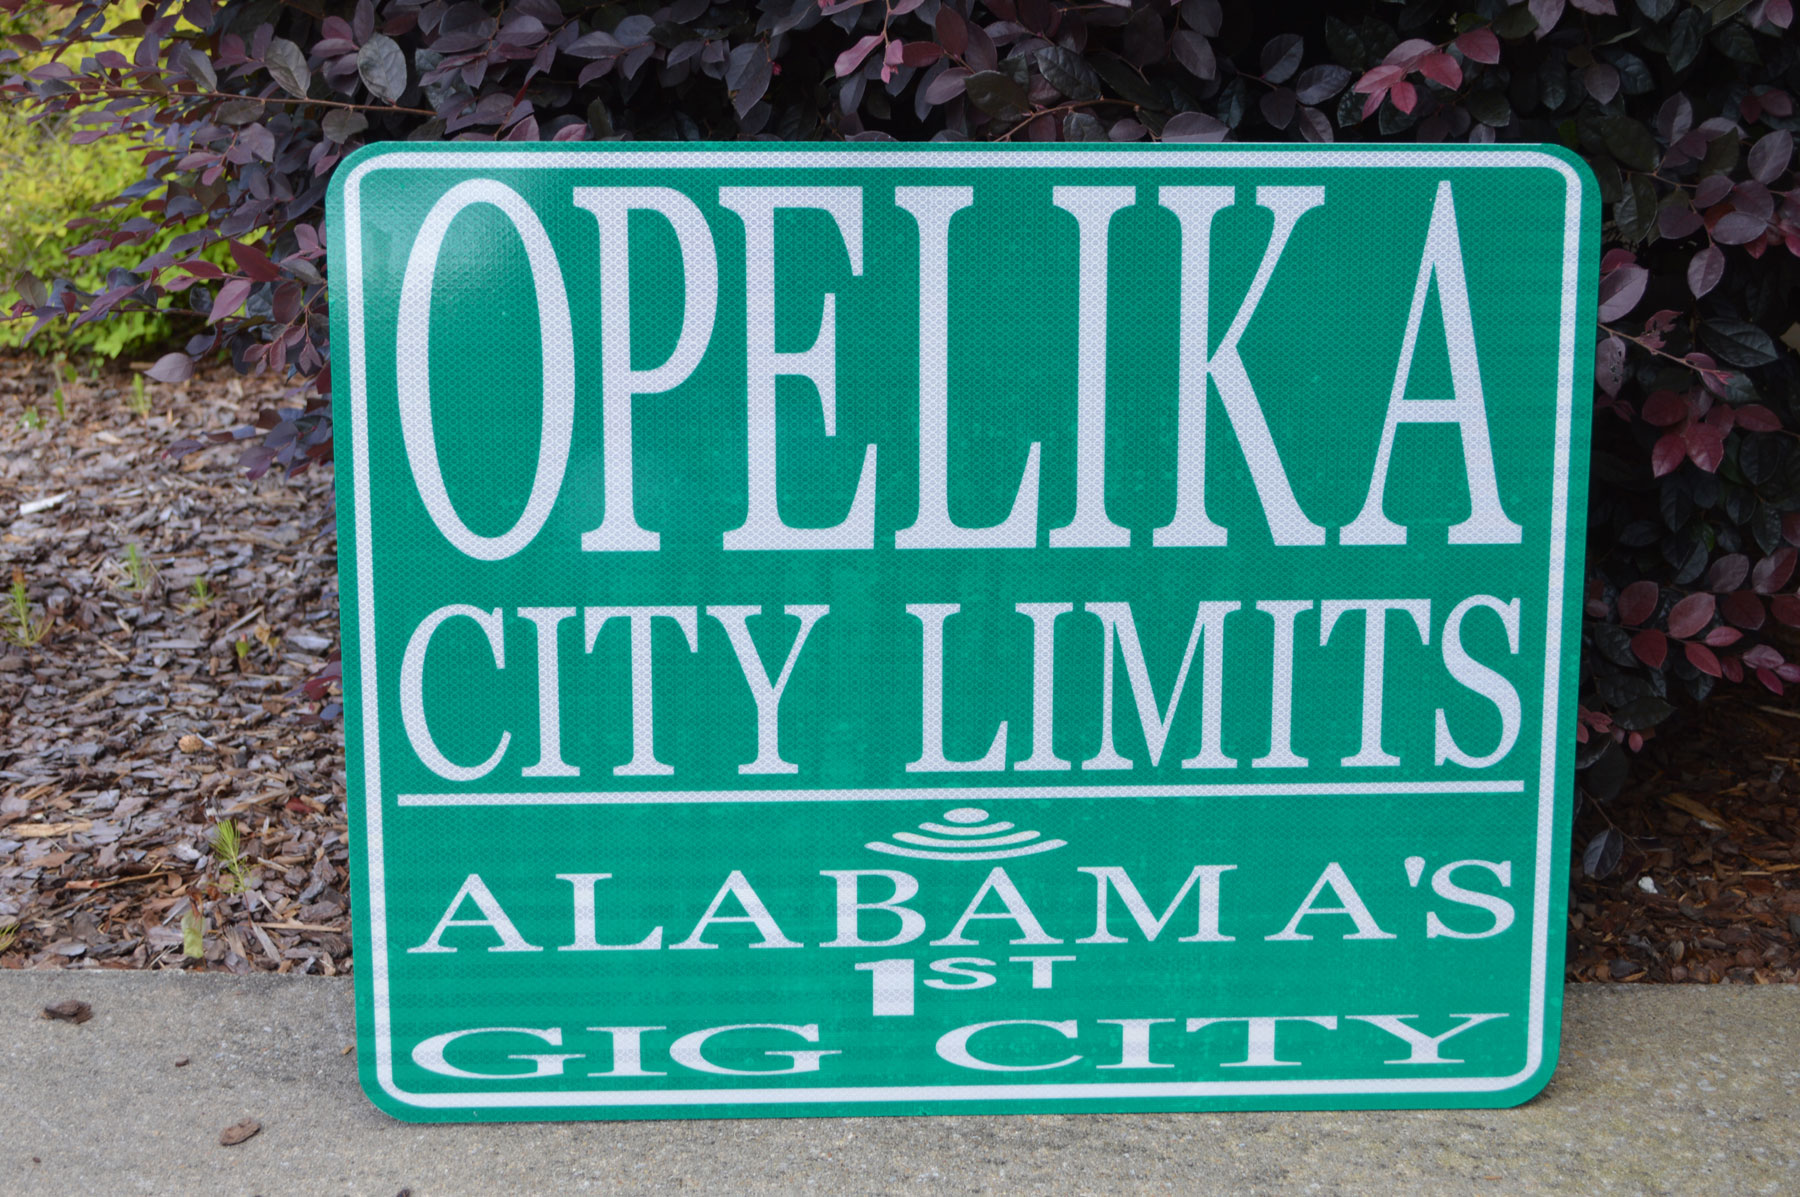 Opelika Considers Medical Cannabis Dispensing in City